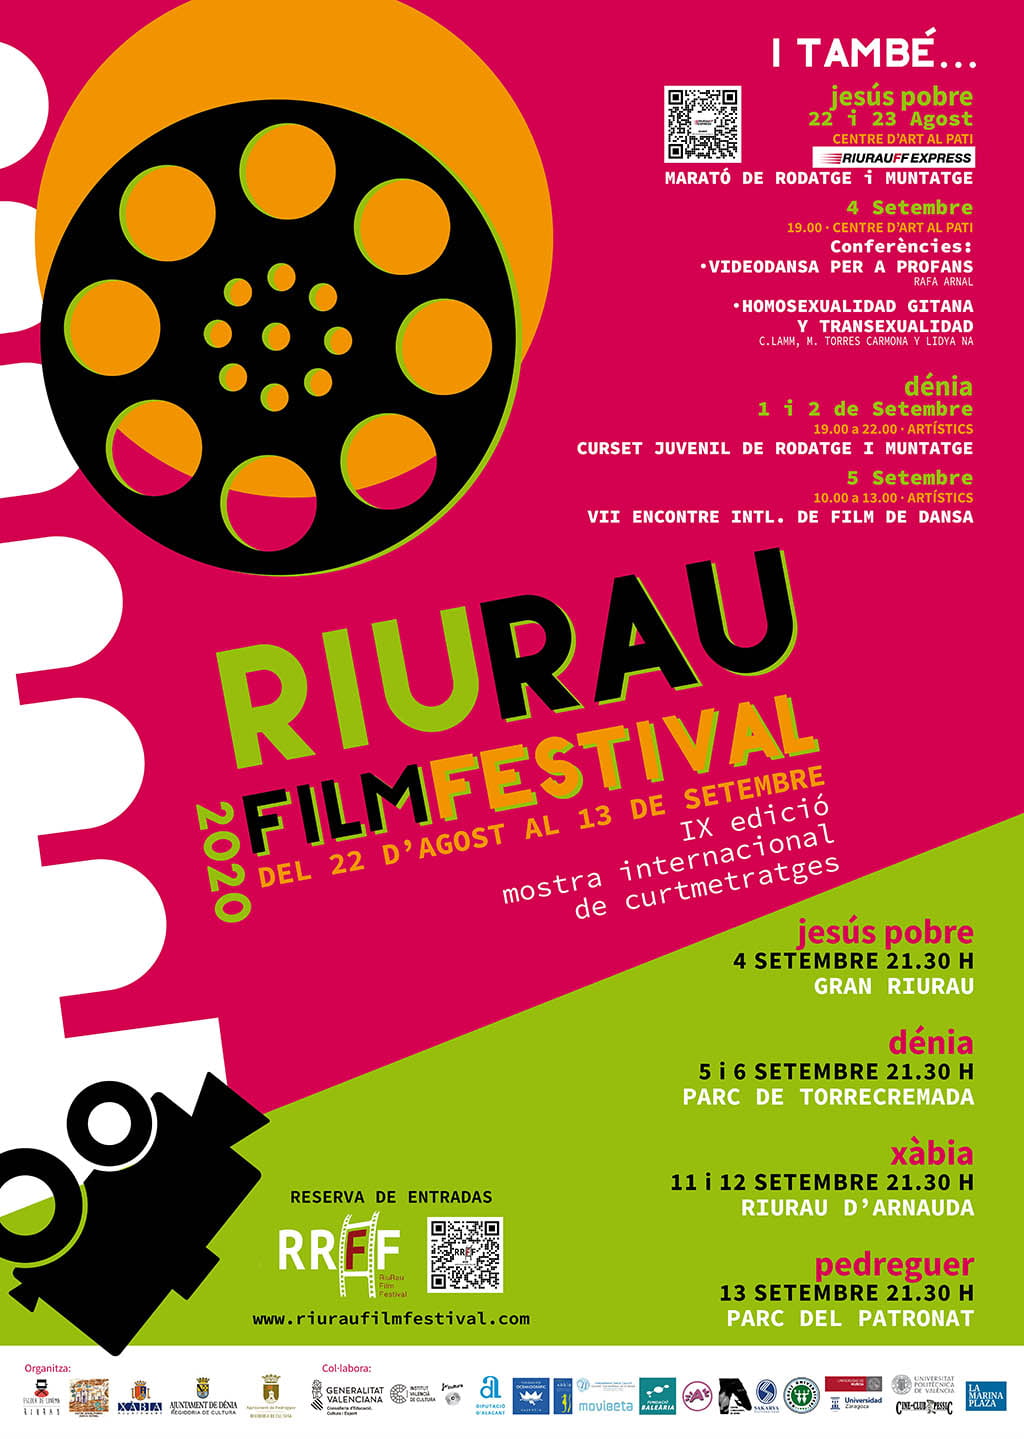 Cartel Riurau film festival 2020